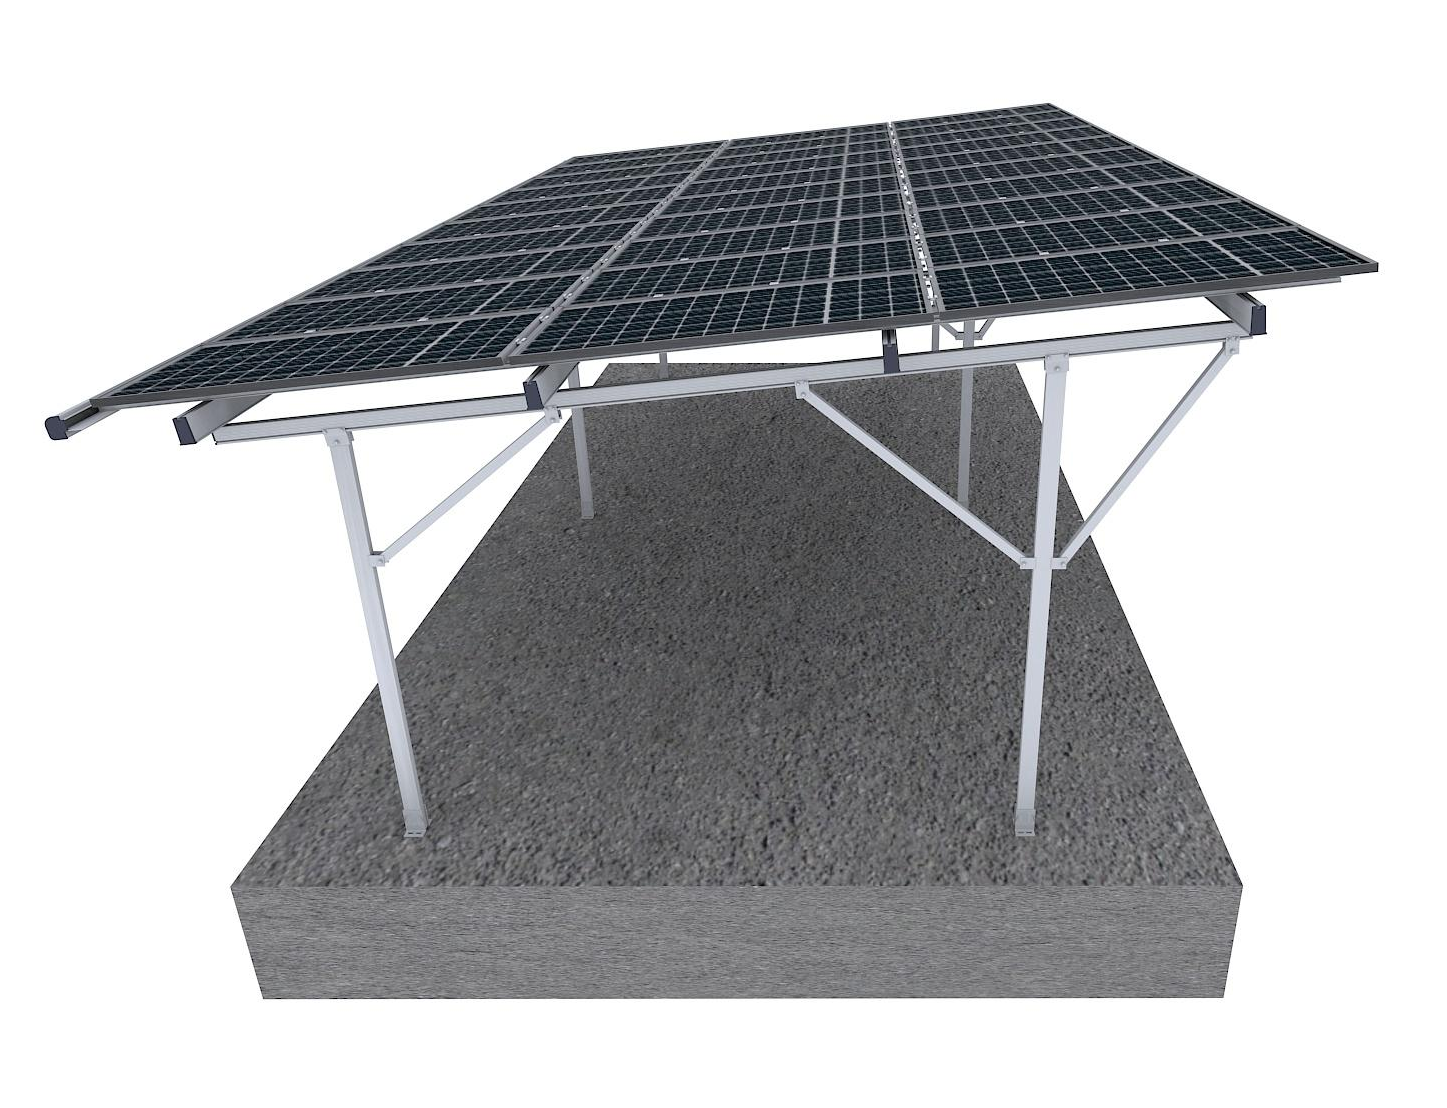 SOEASY solar carport - EAC-W